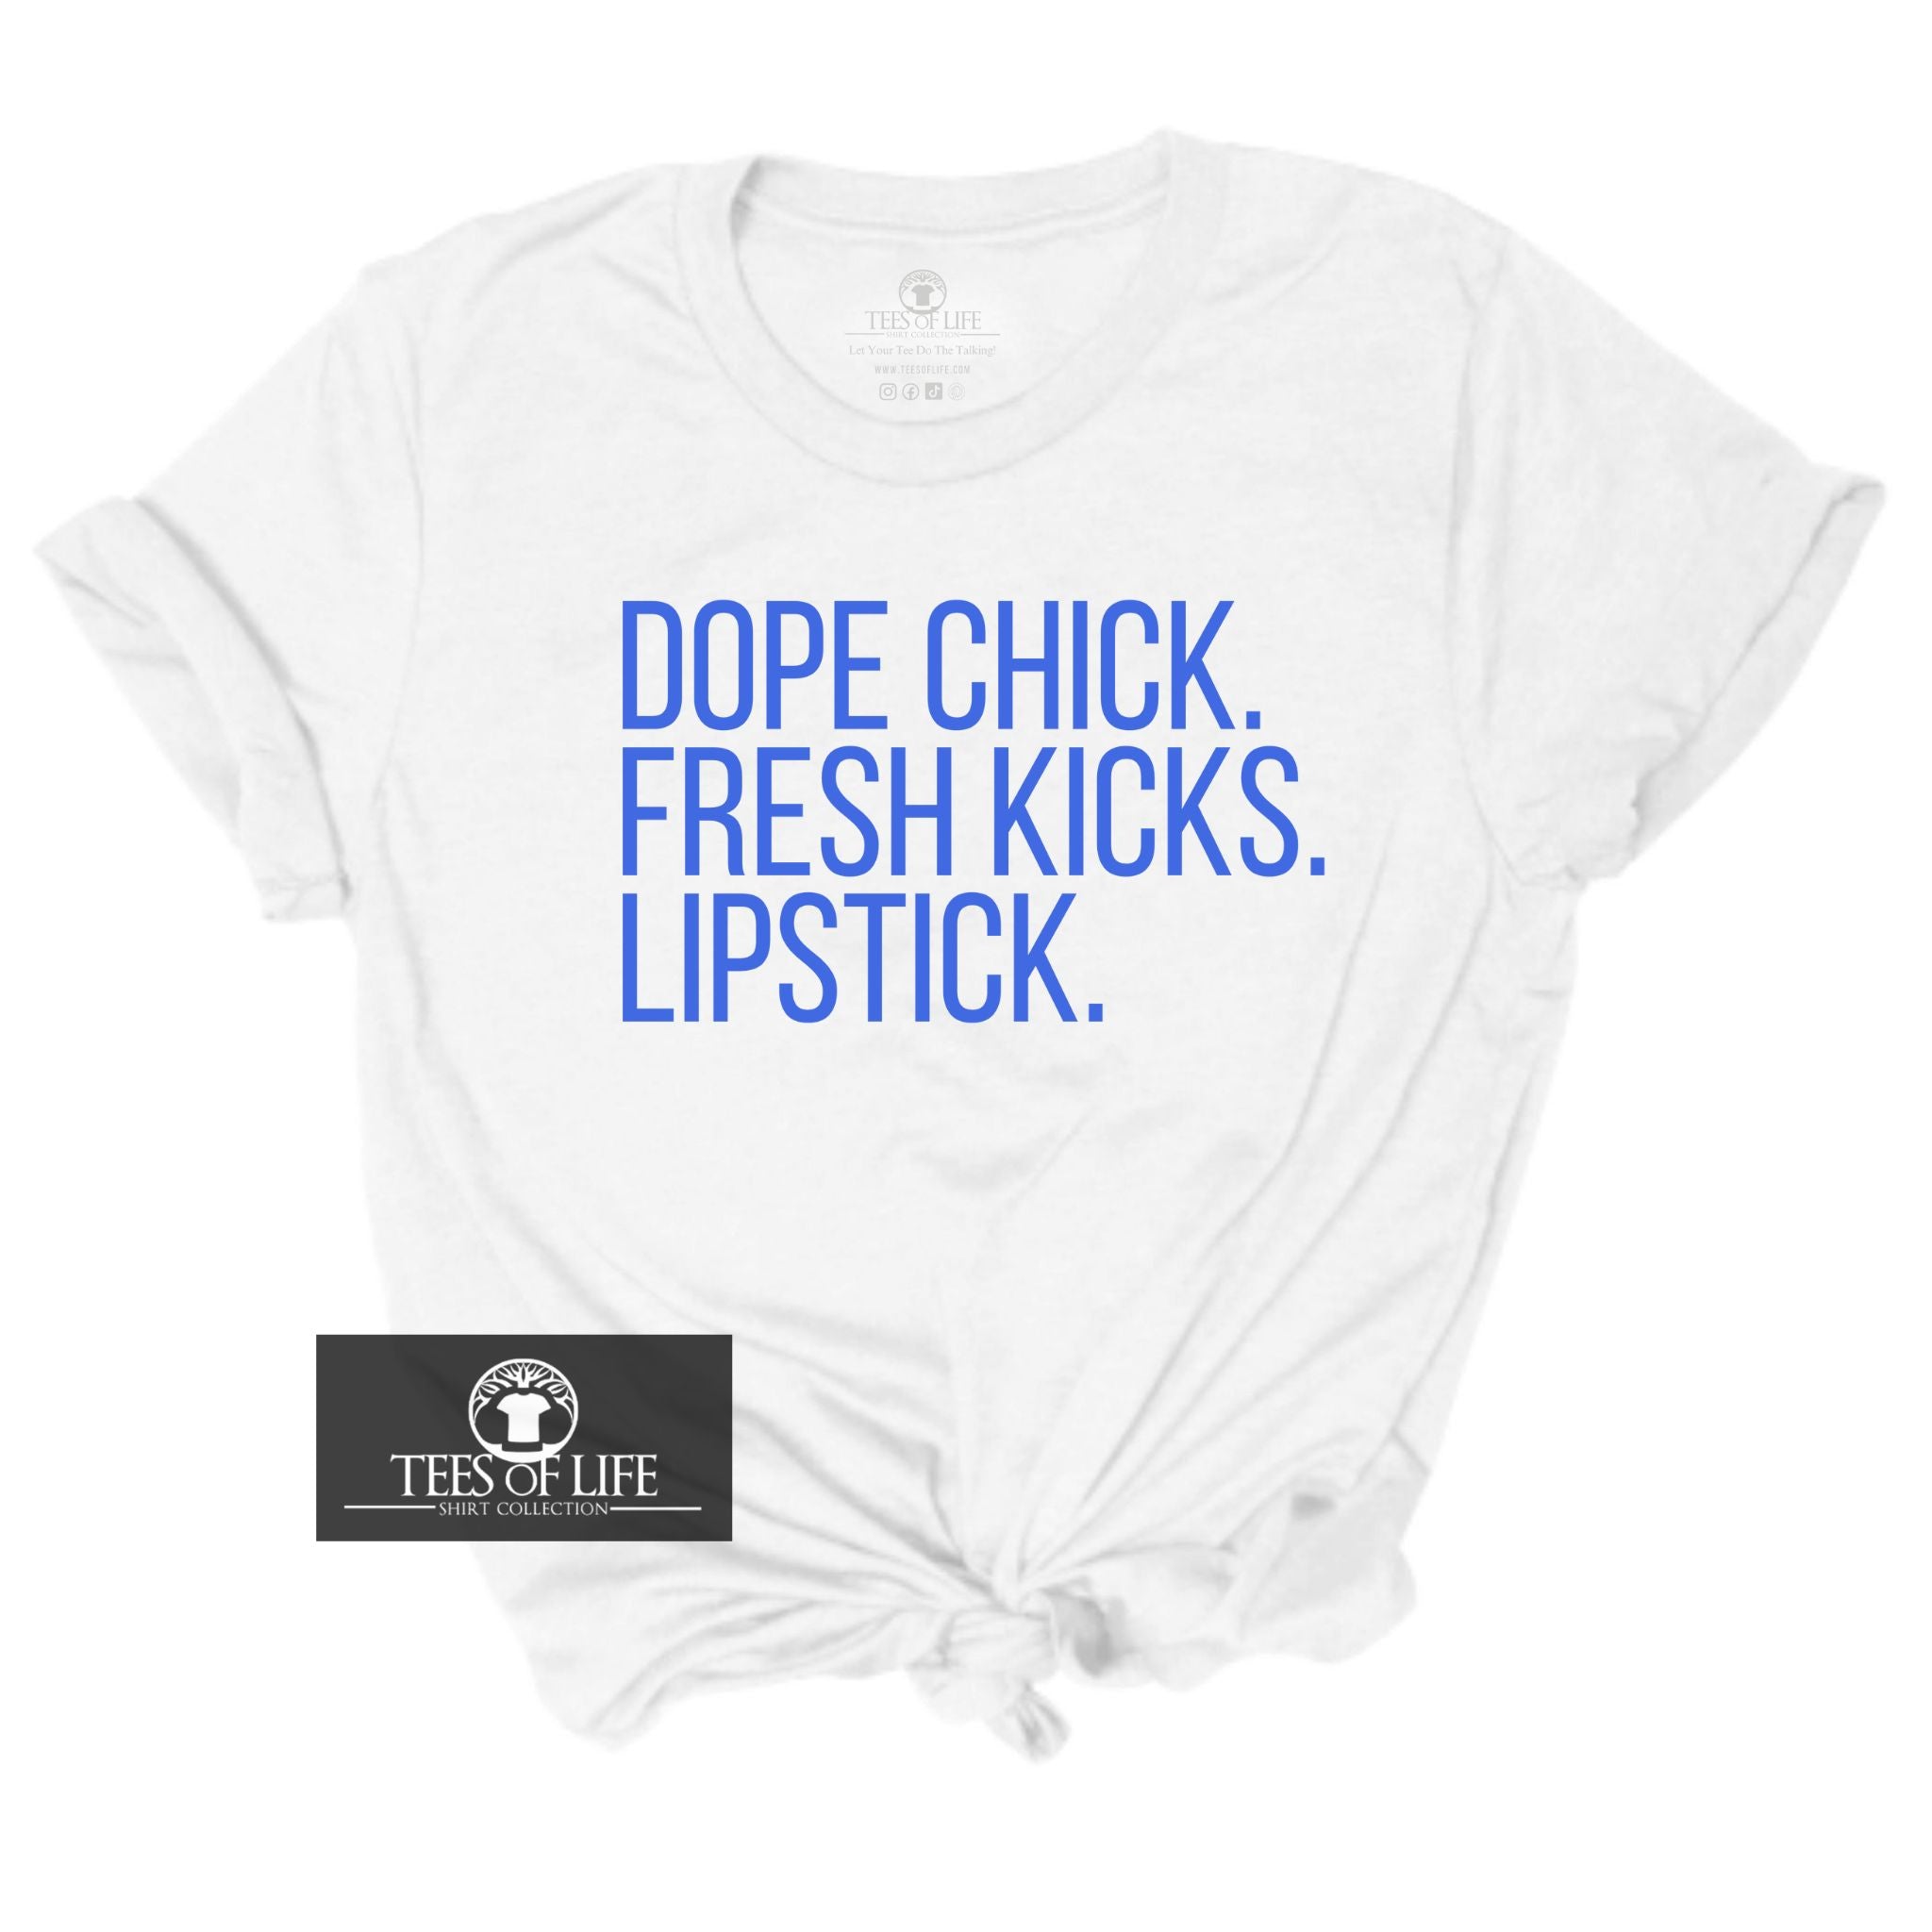 Dope Chick Fresh Kicks Lipstick Tee (Royal Blue Letters)